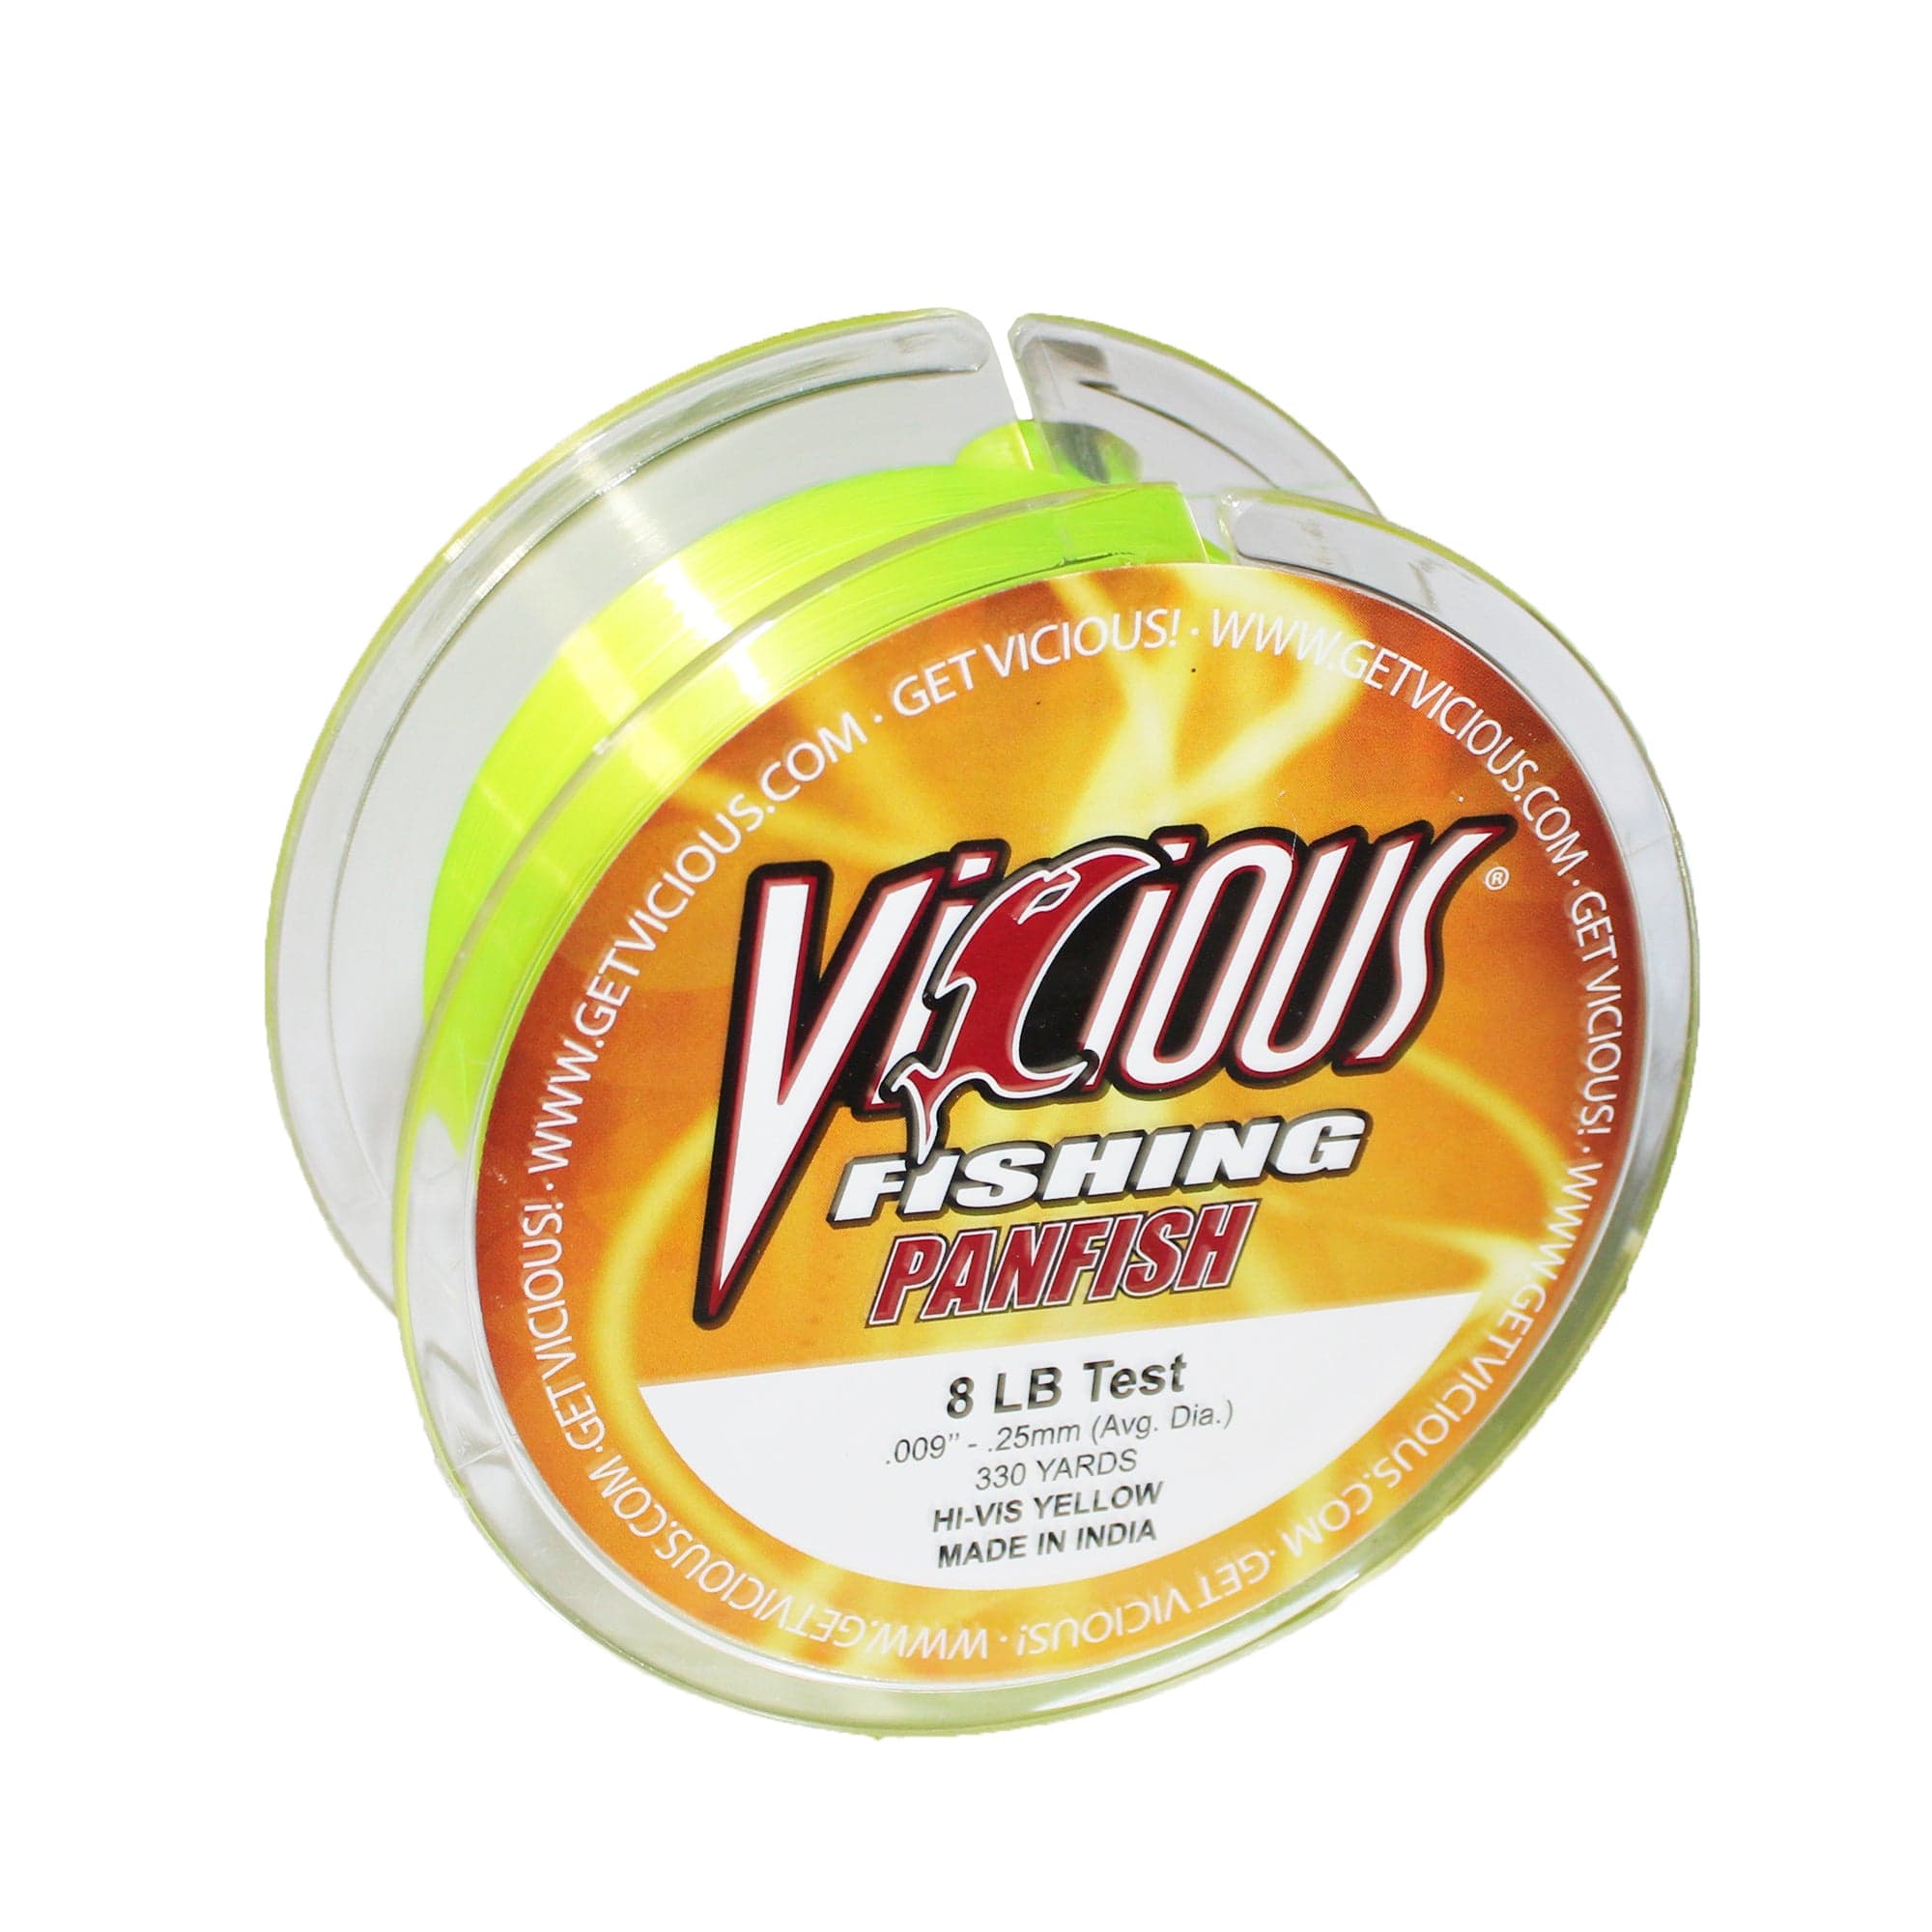 Vicious Fishing Panfish HI-VIS Yellow PYL8 Fishing Line 330 YD./8lb